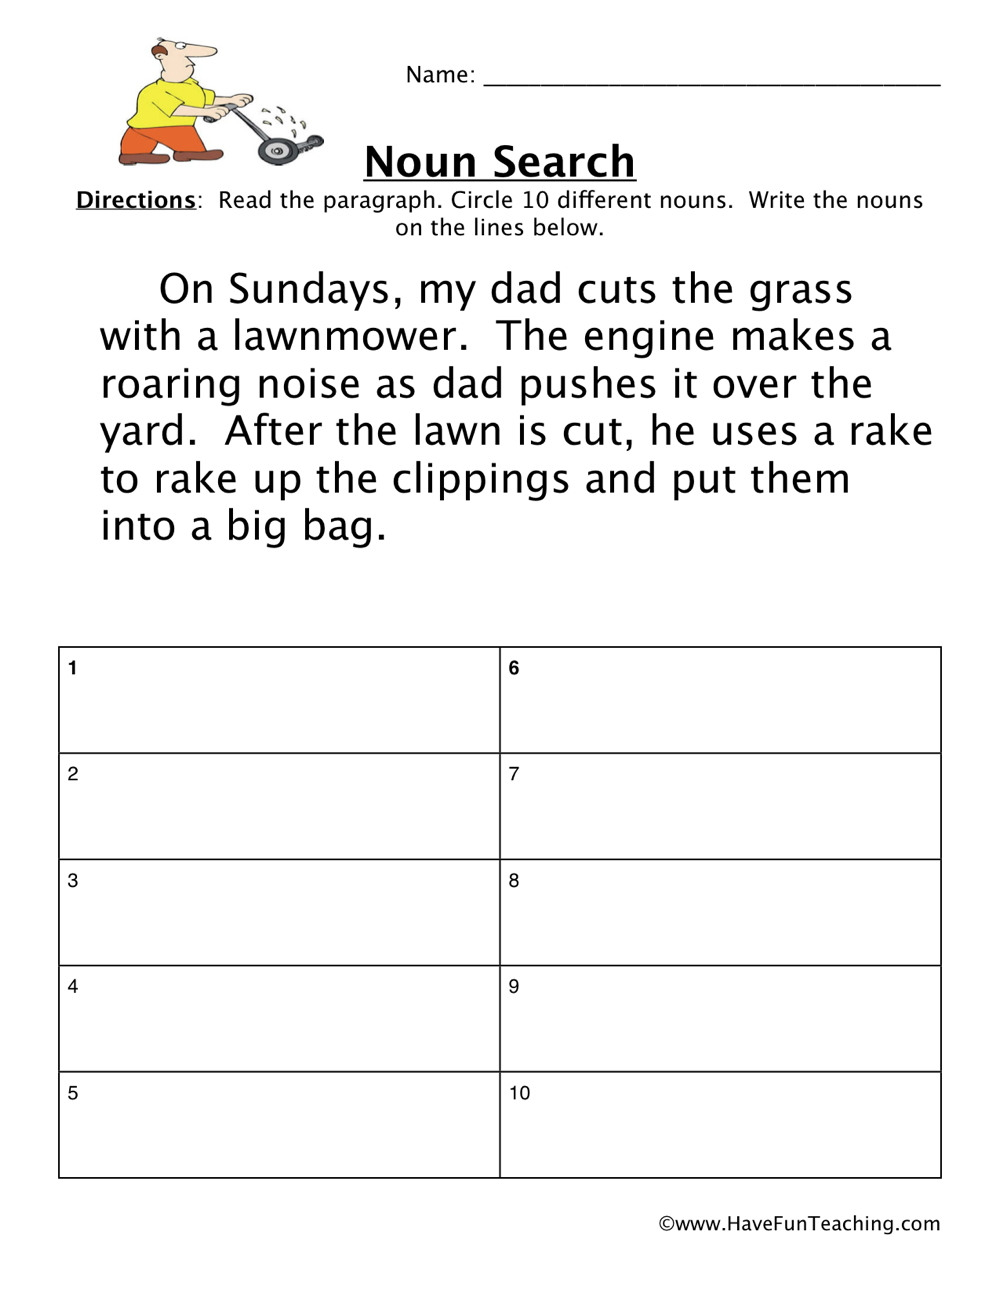 Finding Nouns Worksheet Have Fun Teaching Db excel